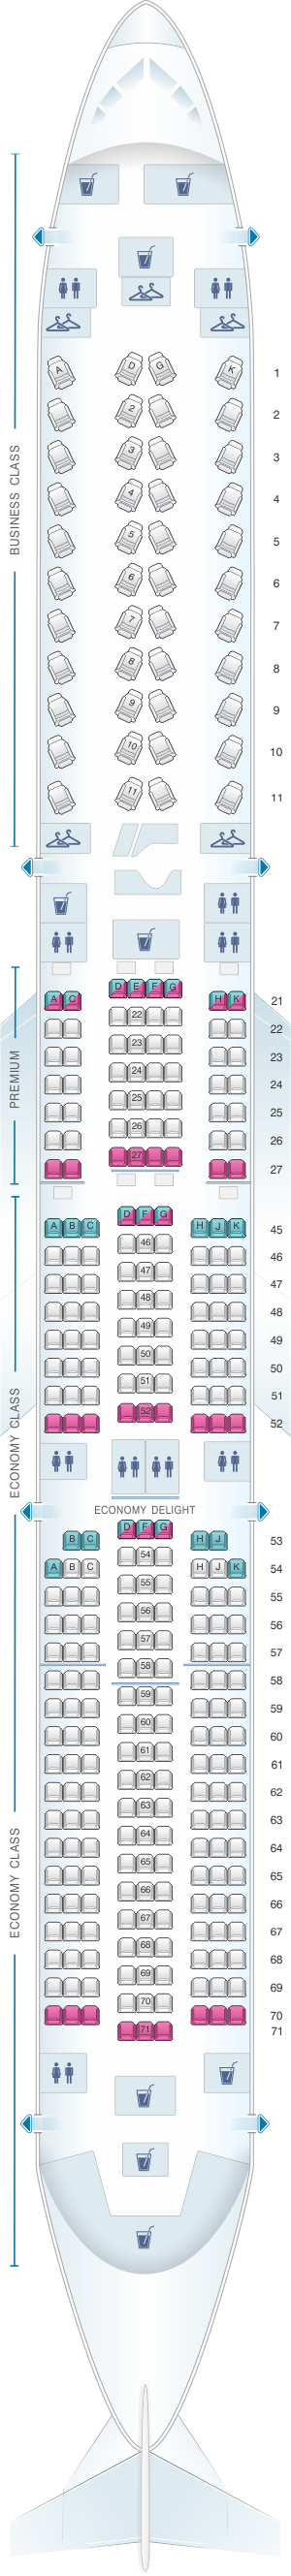 Atlantic Flight Seating Chart